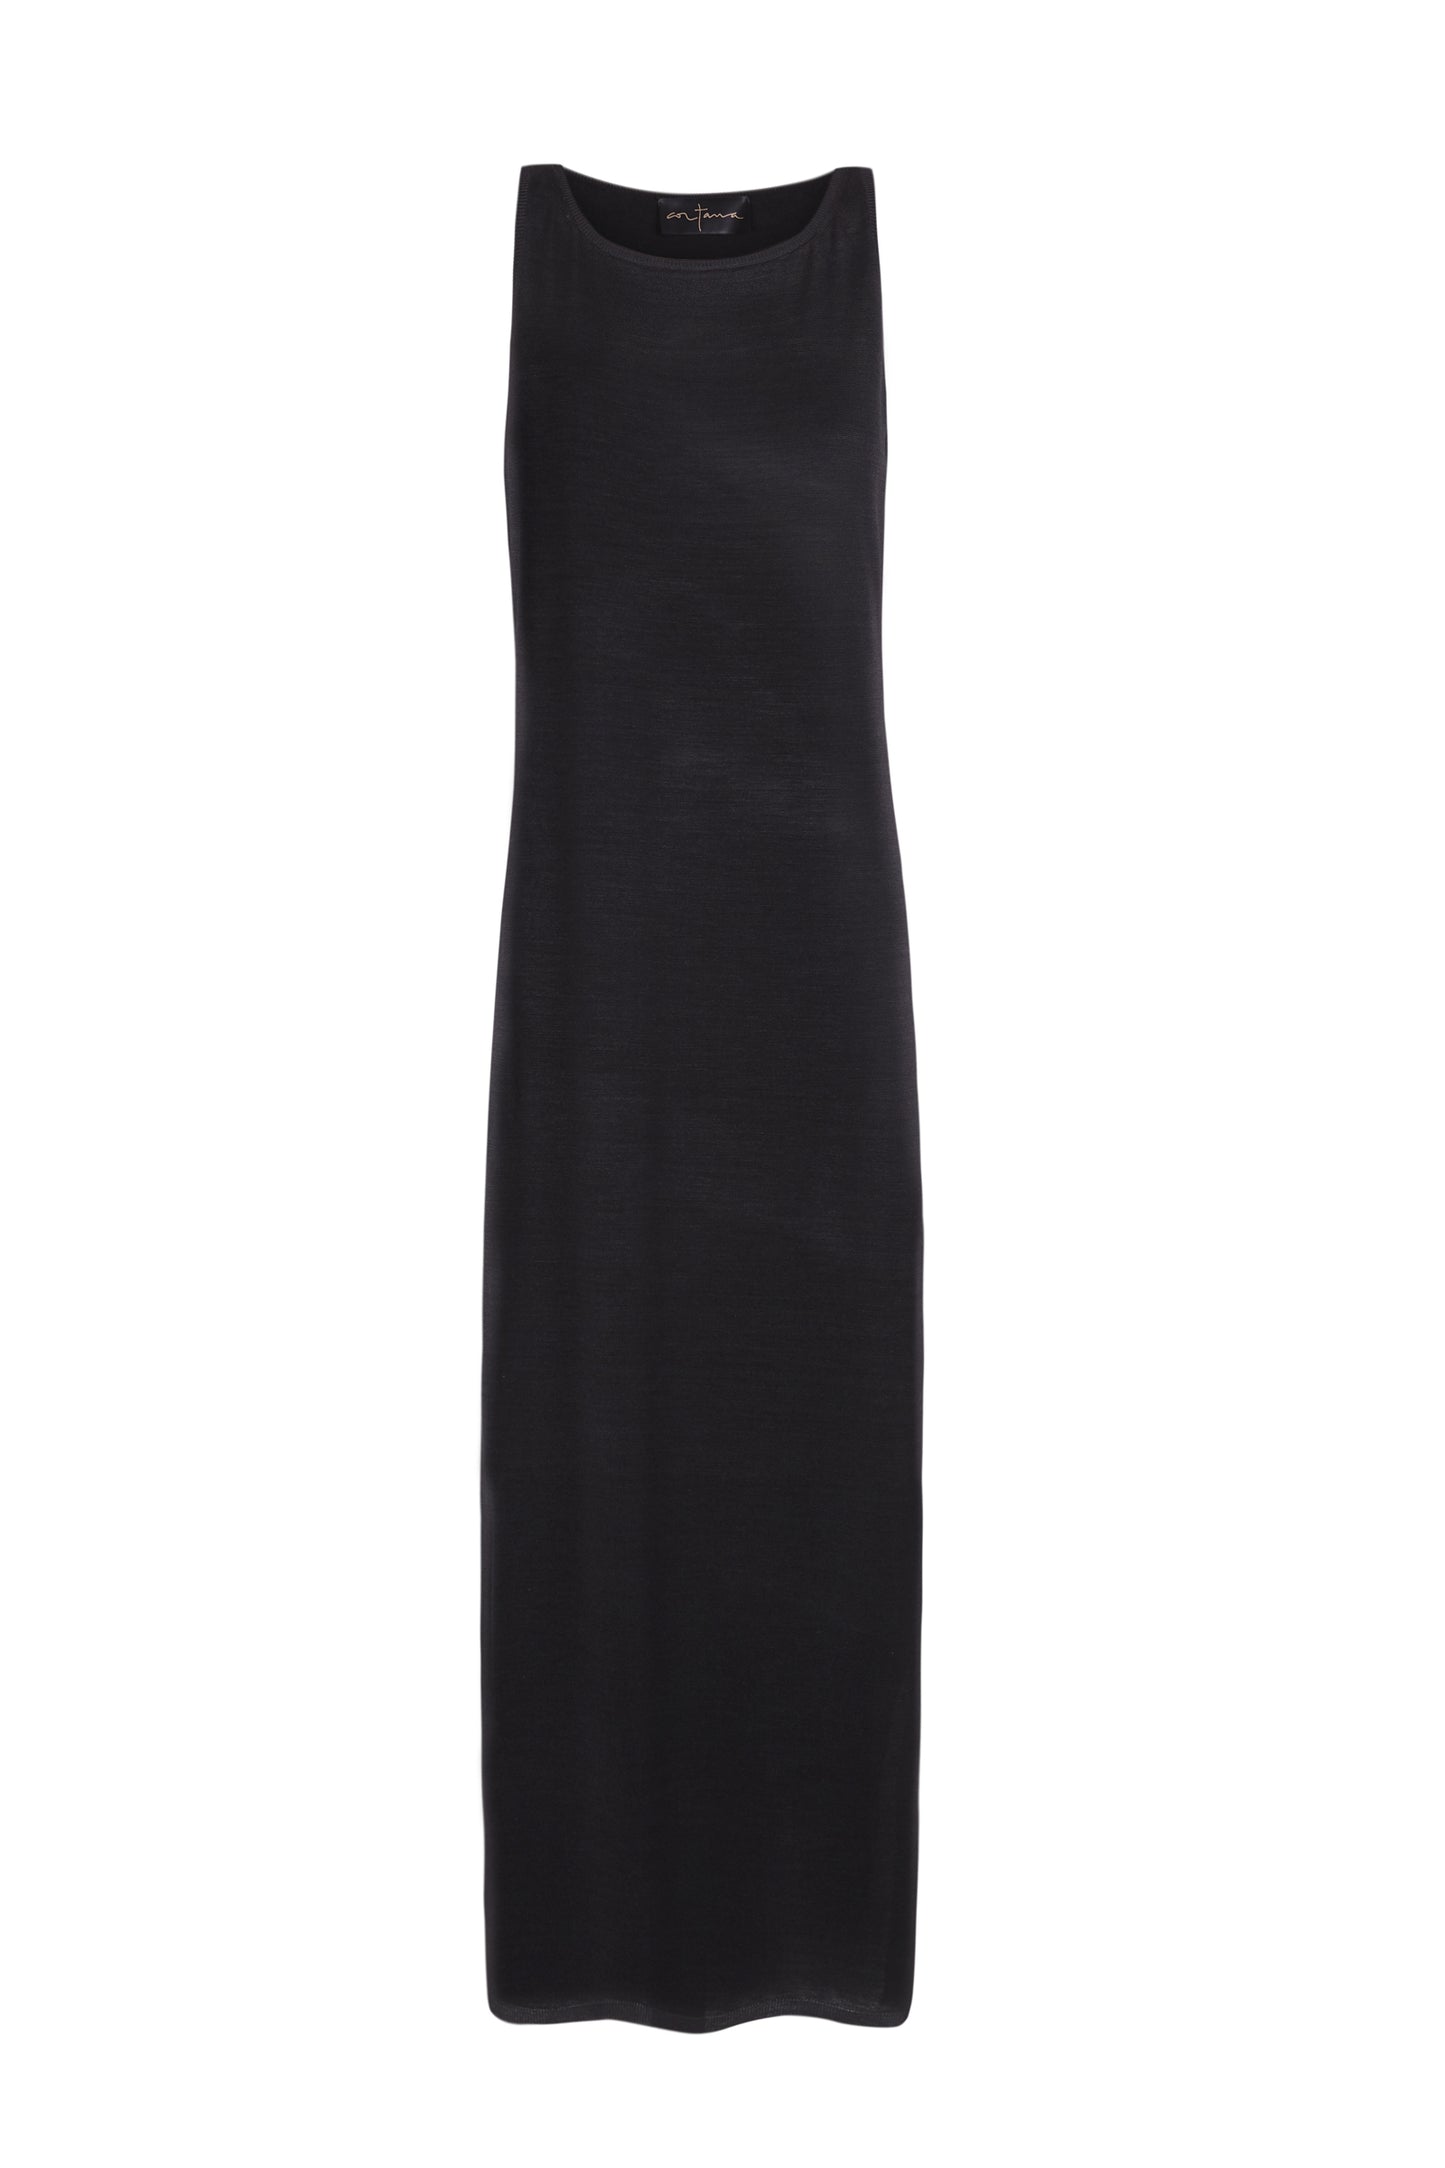 Tulsi, dress in black silk knit